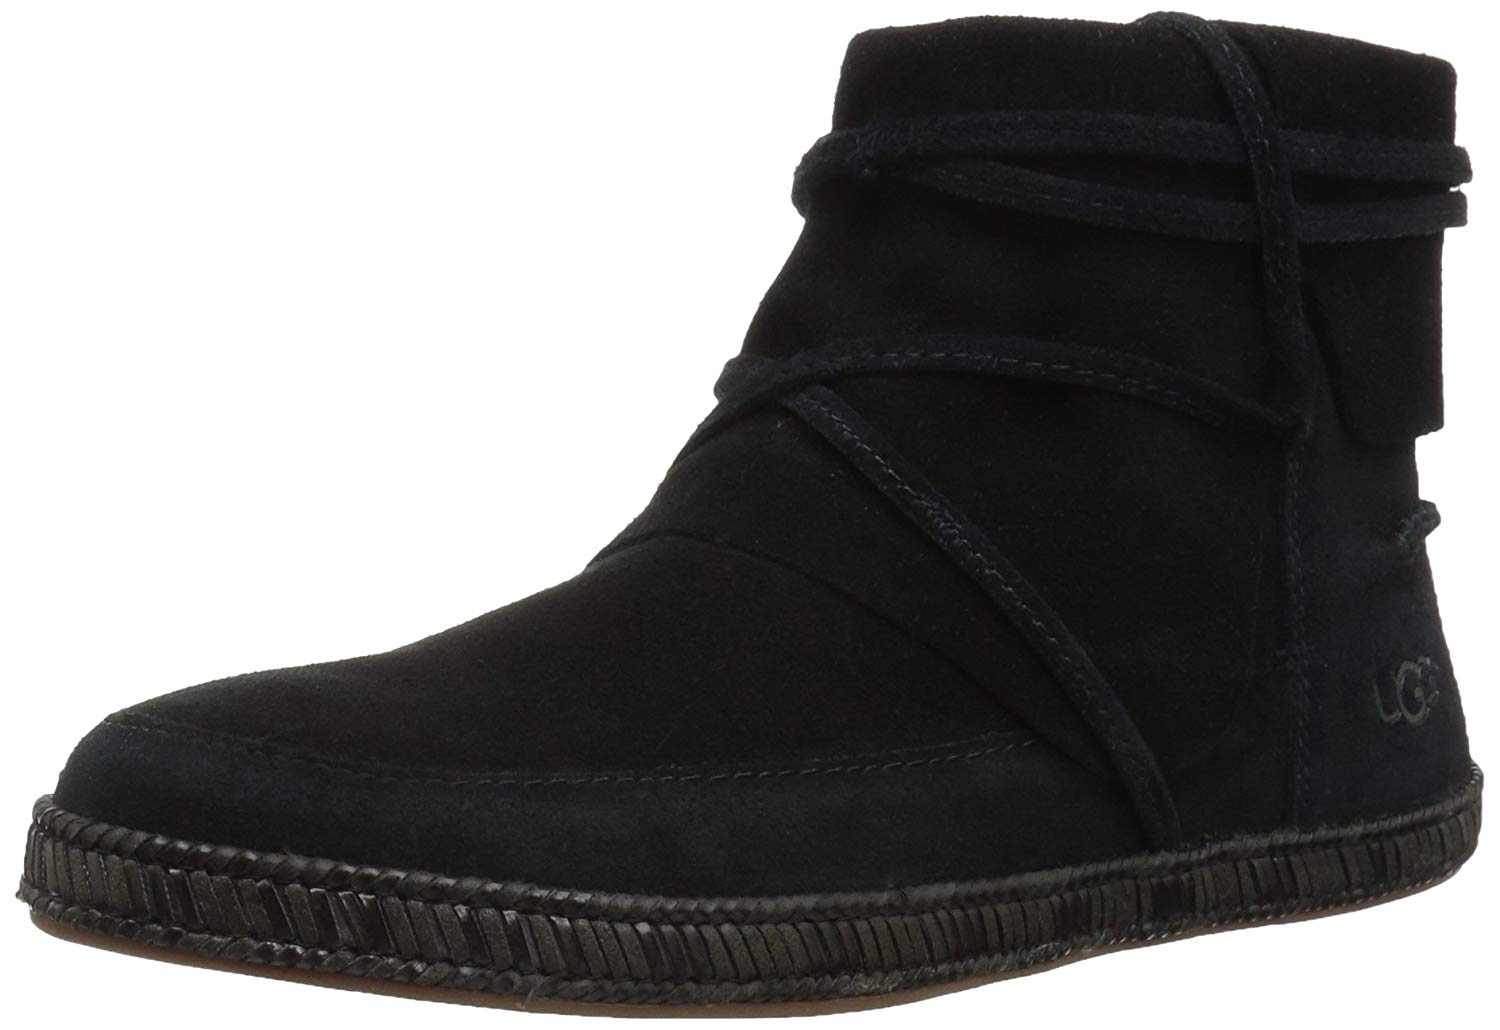 Ugg Australia Women's Shoes W Reid Leather Closed Toe, Black, Size 8.0 ...